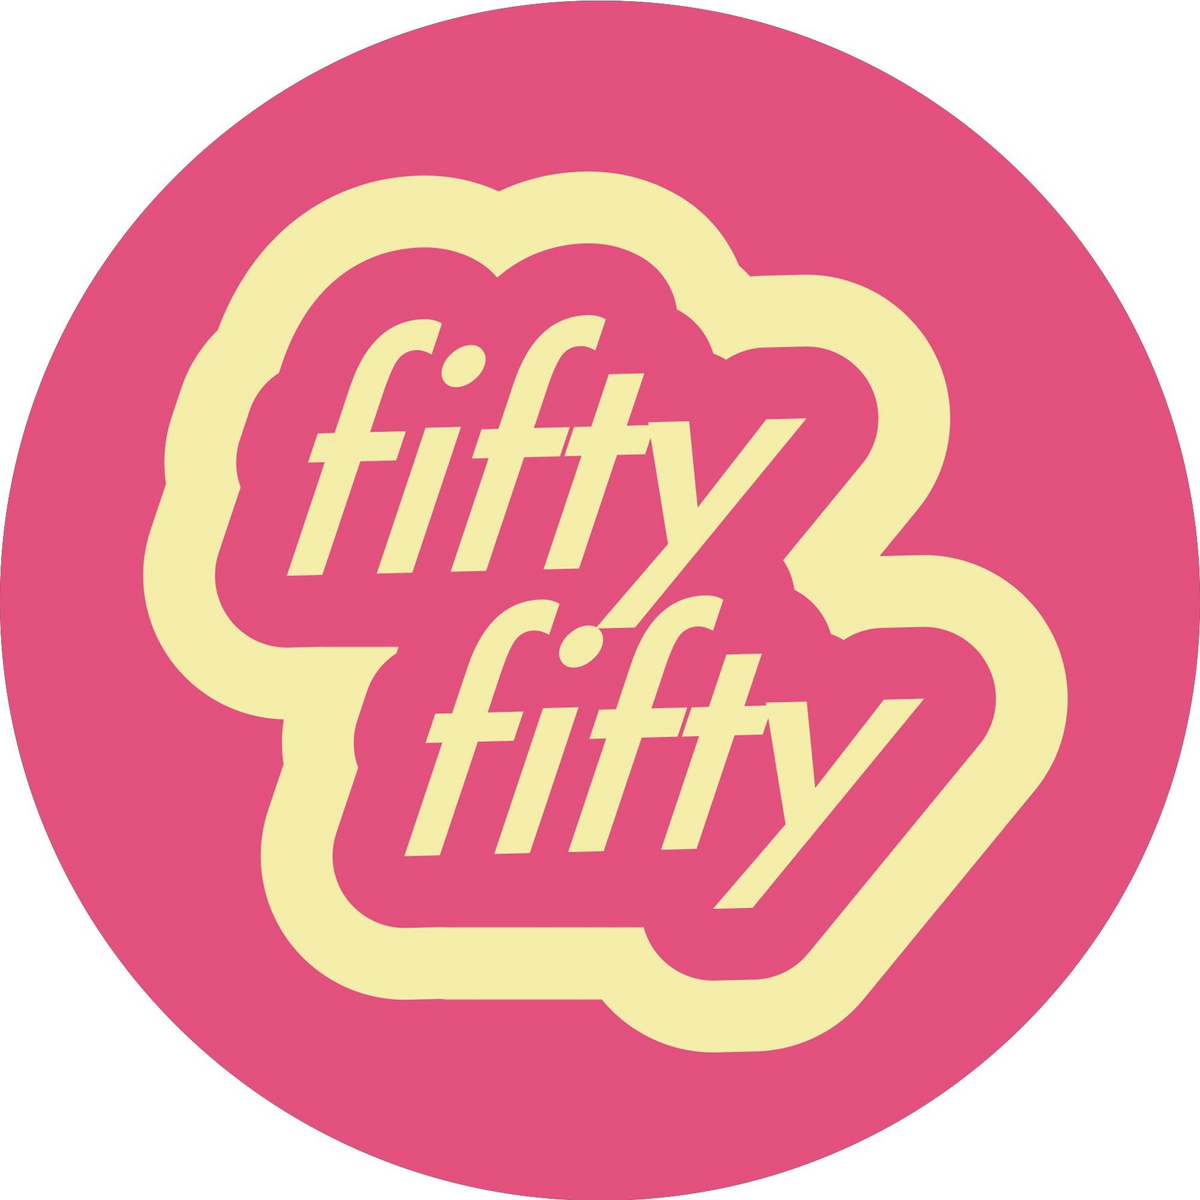 File:Fifty Fifty logo.jpg - Wikipedia